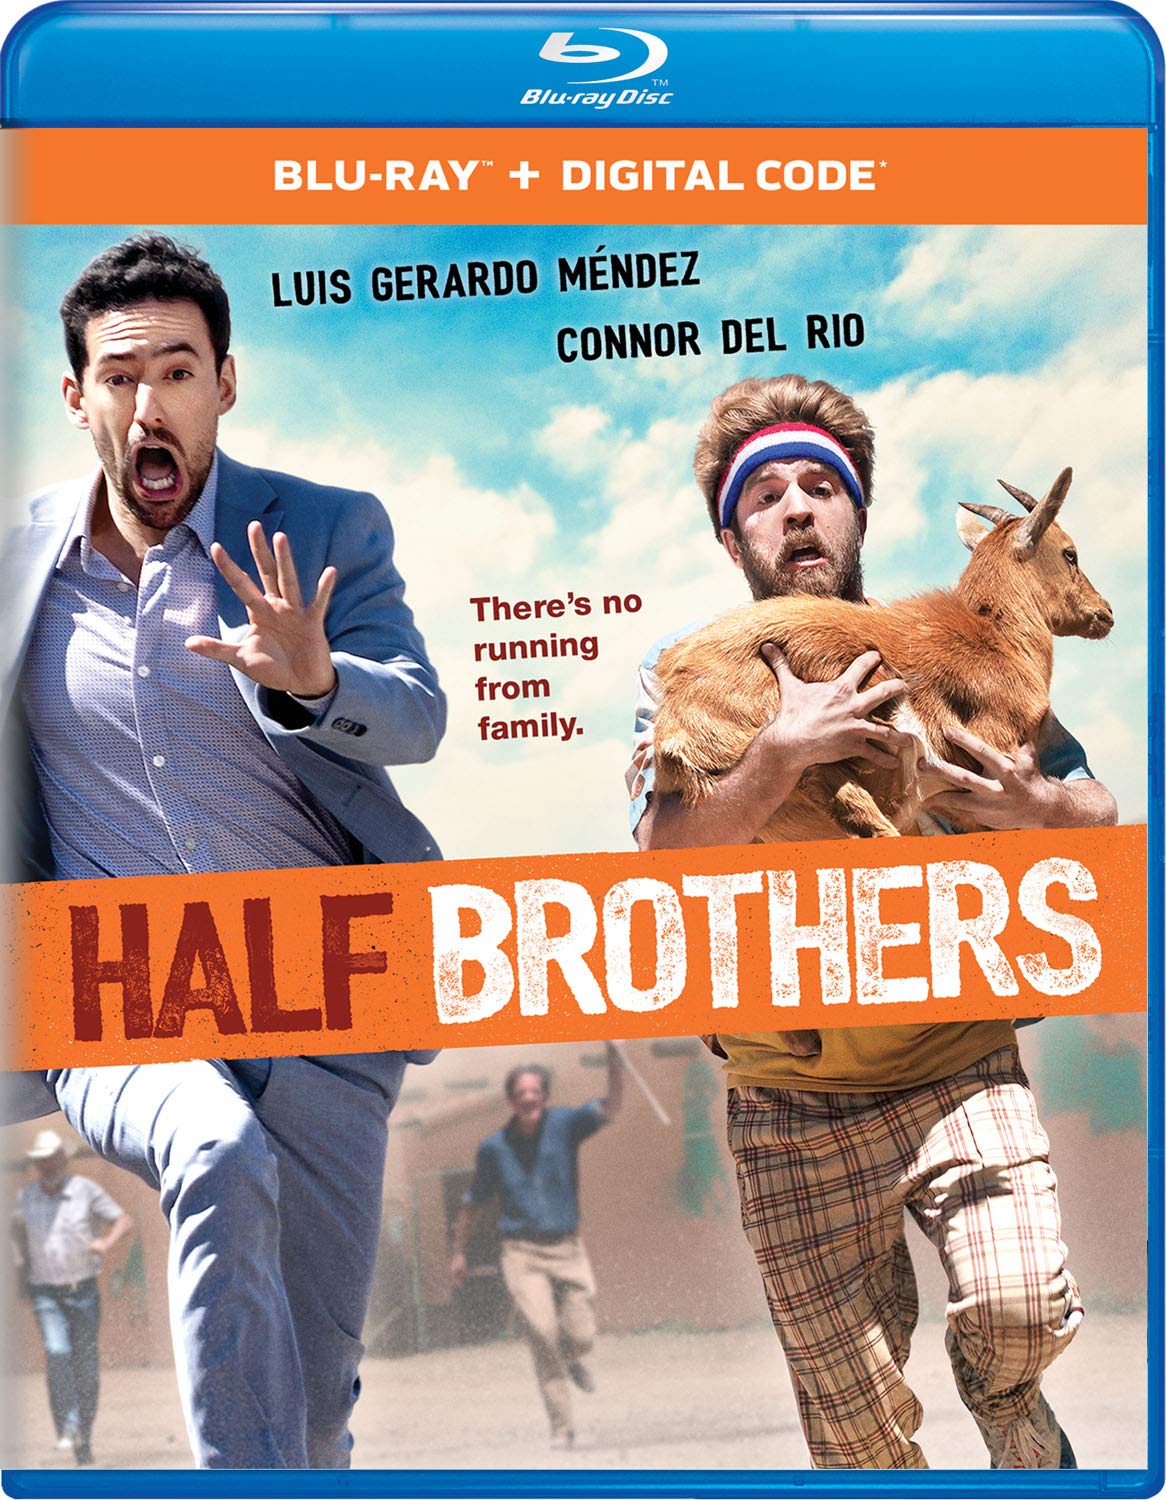 Half brother. Half brothers (2020) Луис Херардо Мендес. Сводные братья half brothers.